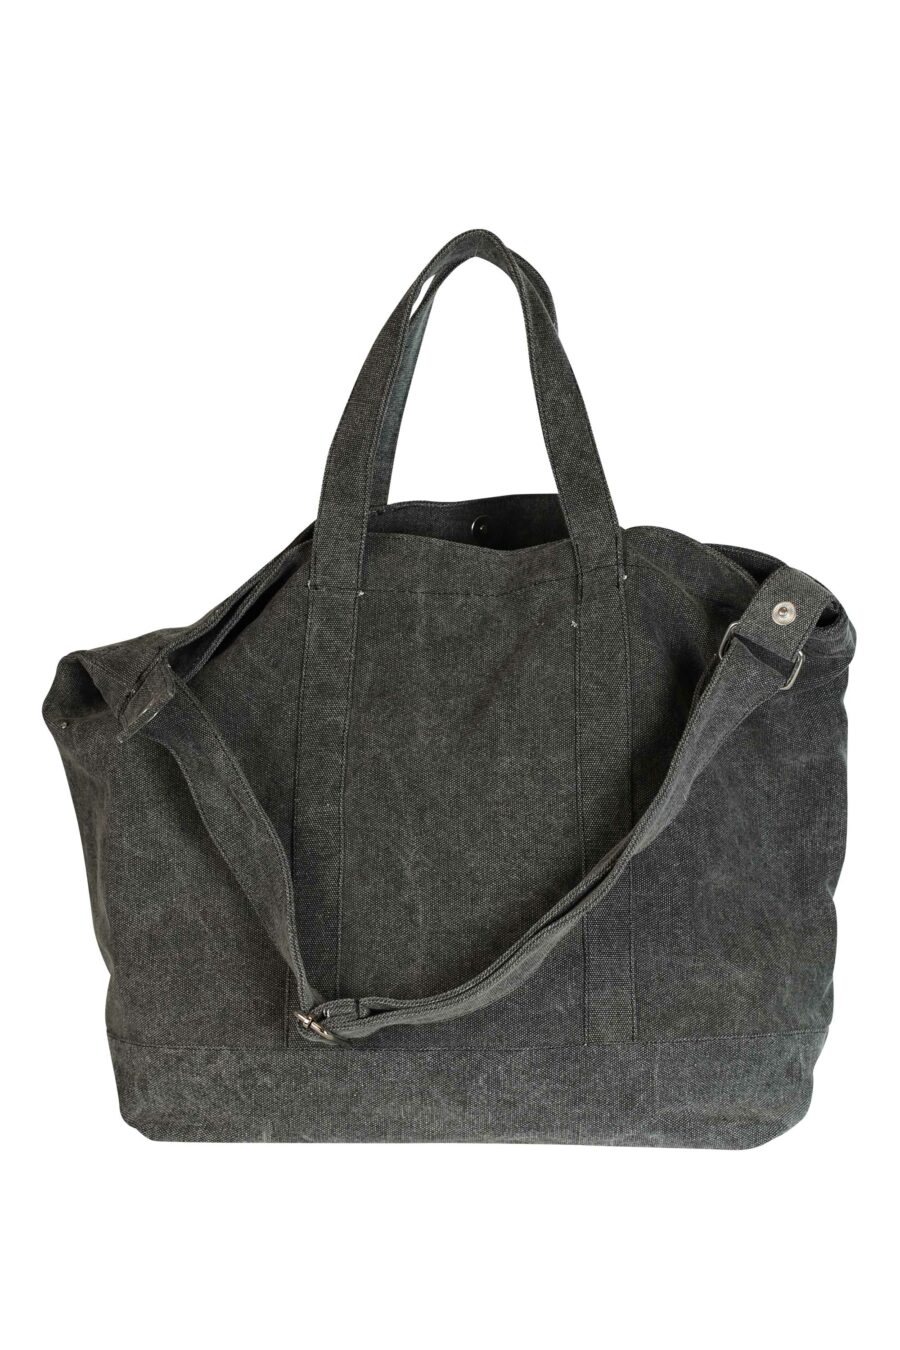 Bolsa de lona extragrande gris con logo "rue st guillaume" - 8720744102335 3